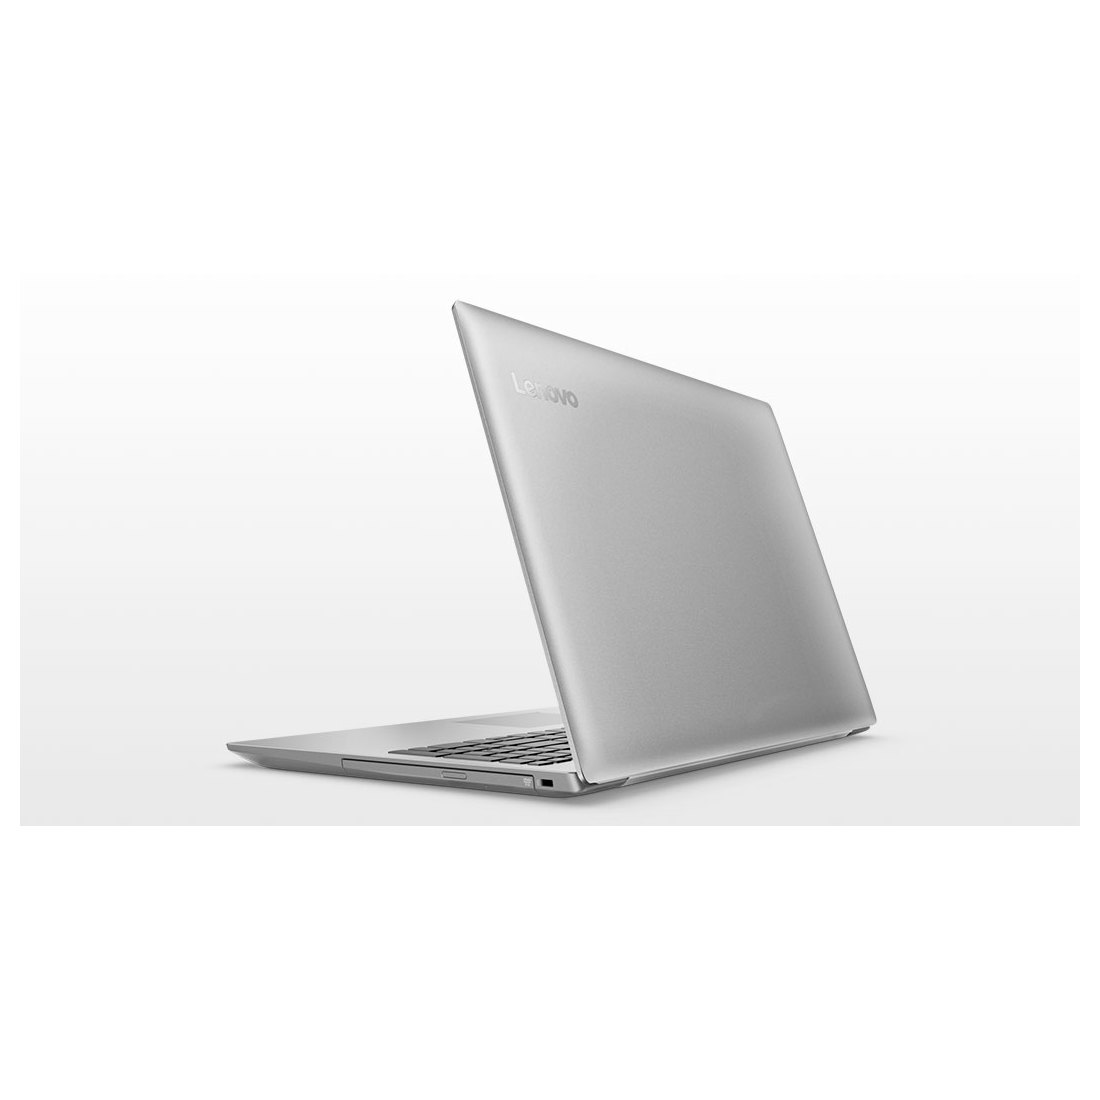 Lenovo ideapad 320-14IKB Laptop – Core i5 2.5GHz 8GB 1TB 4GB Win10 15.6inch  FHD Grey price in Bahrain